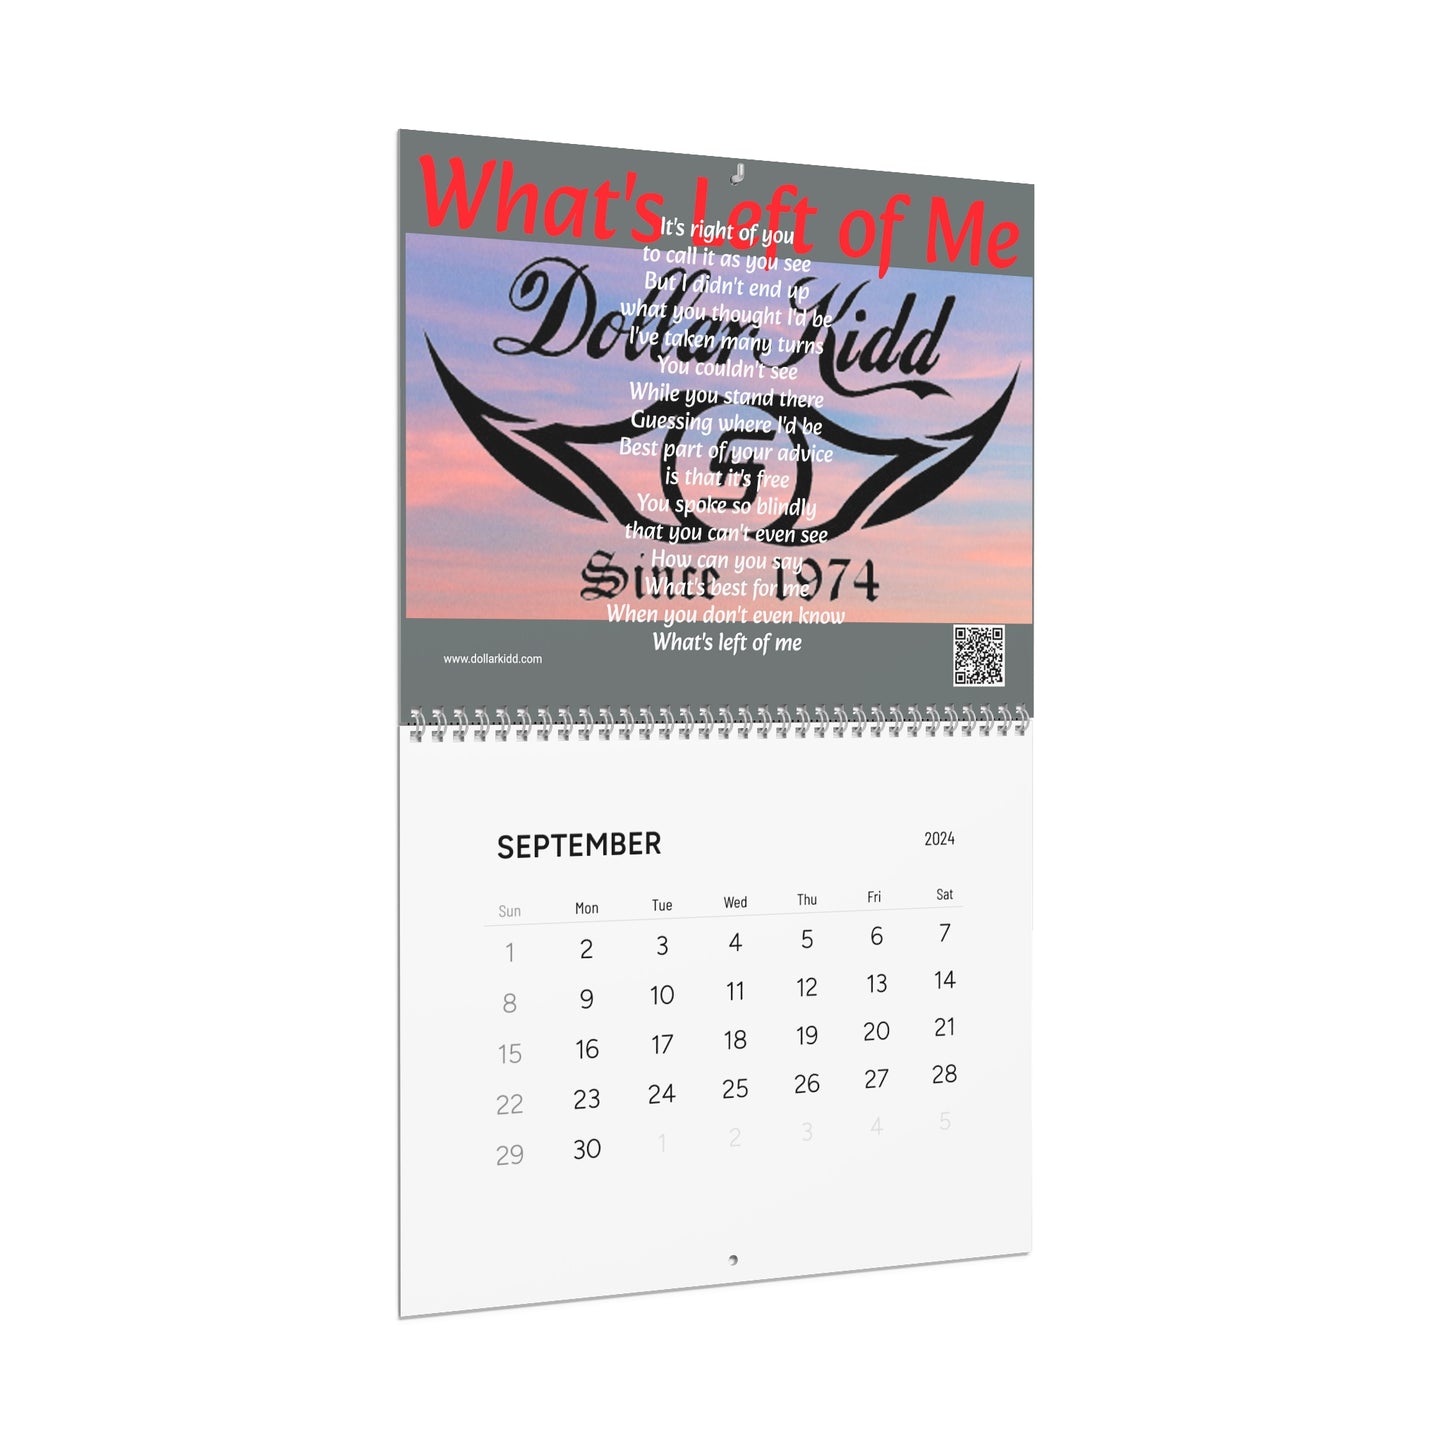 Dollar Kidd Wall Calendars (2024)